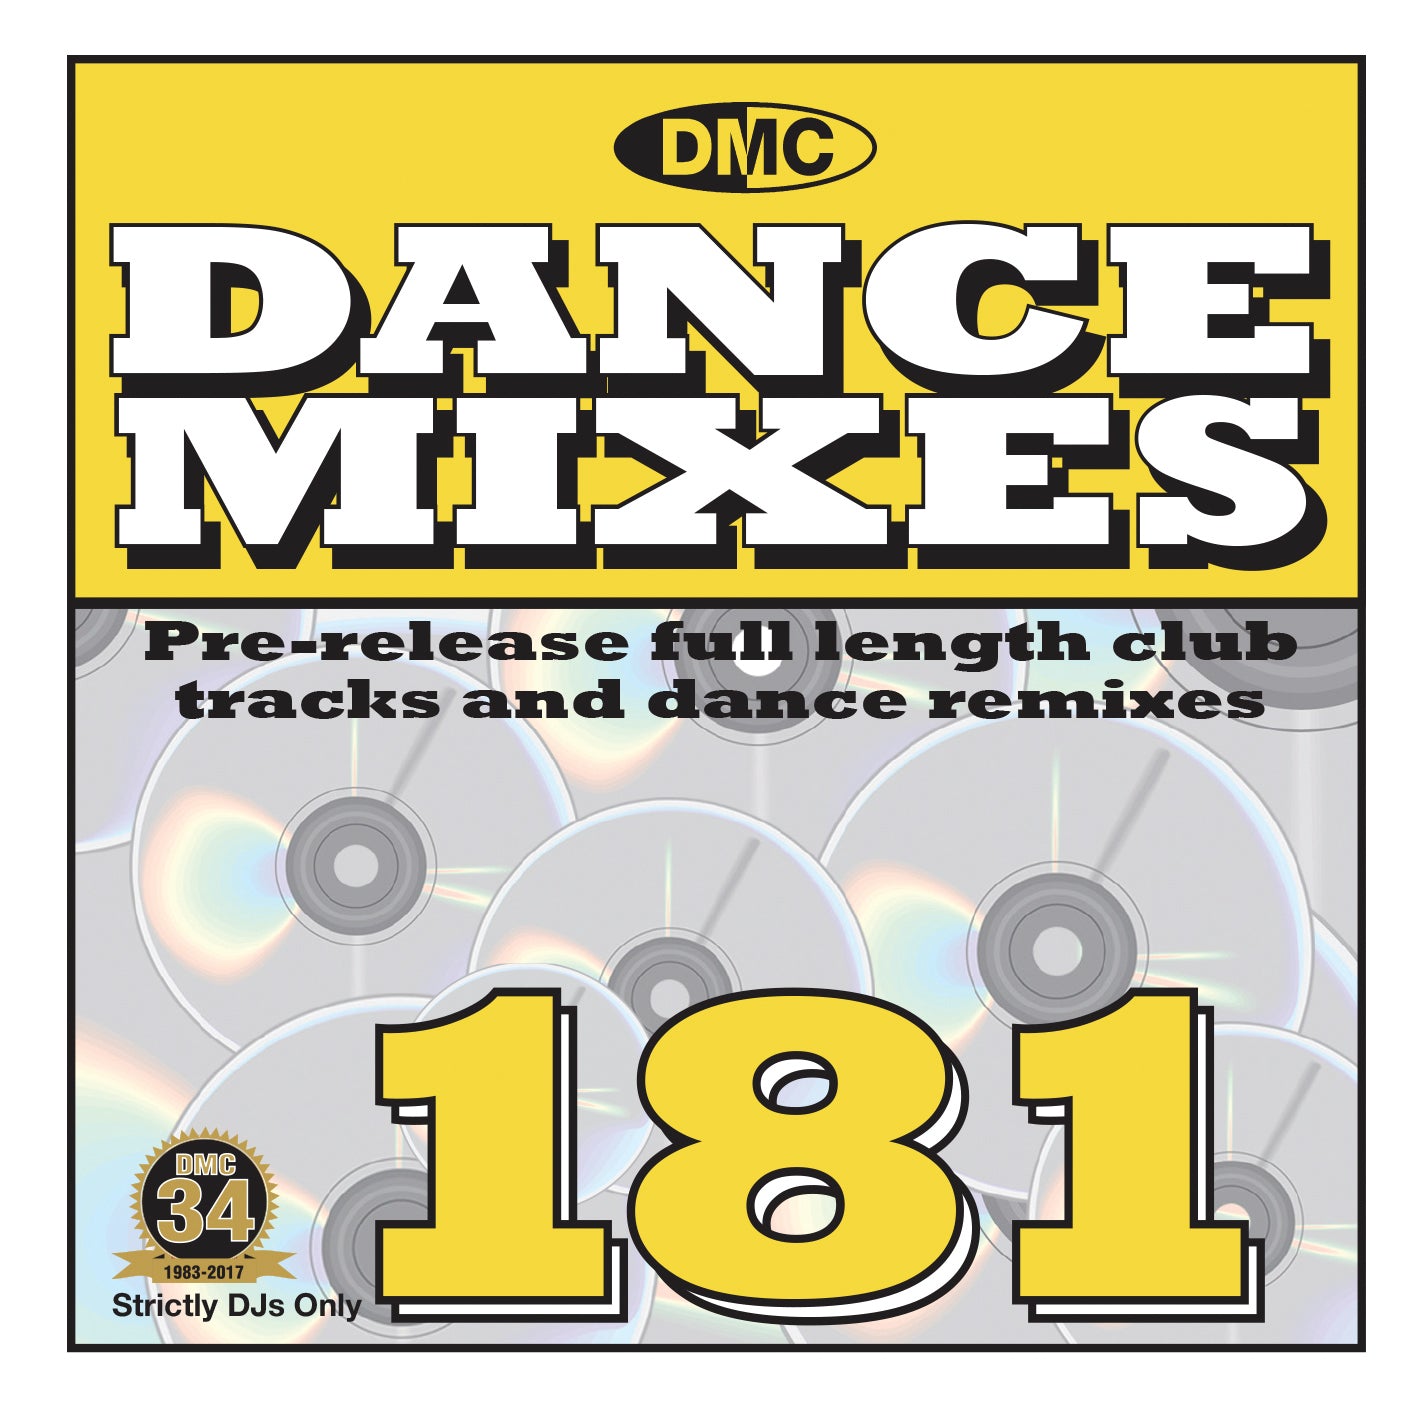 DMC DANCE MIXES 181 - Pre-release full length club tracks and dance remixes - April 2017 release